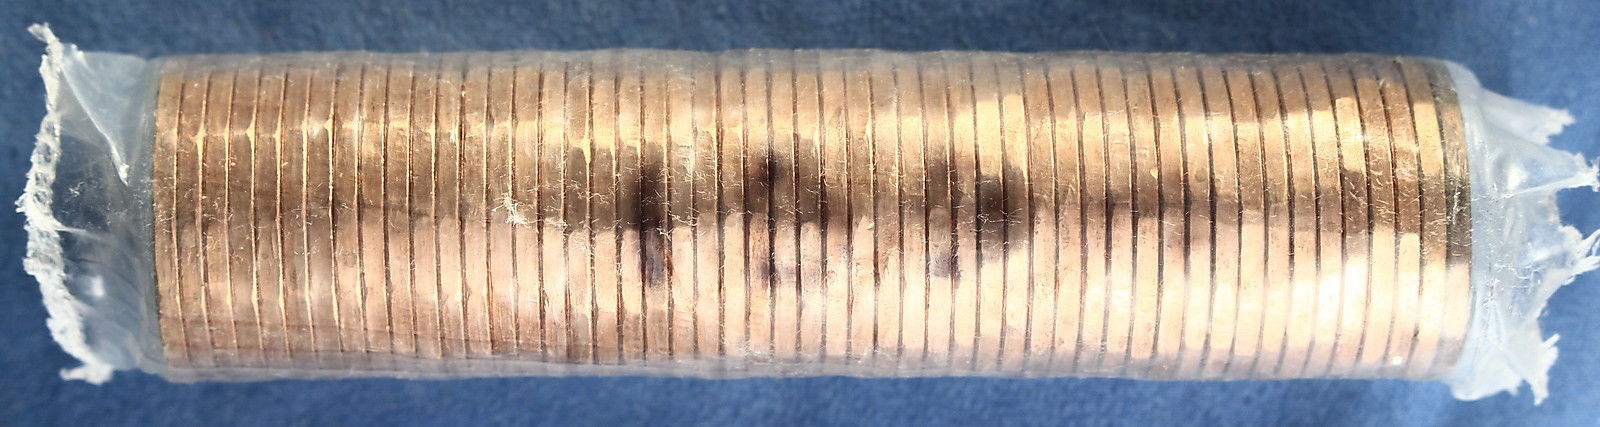 Canada 1990 Original Mint Roll of Pennies   1